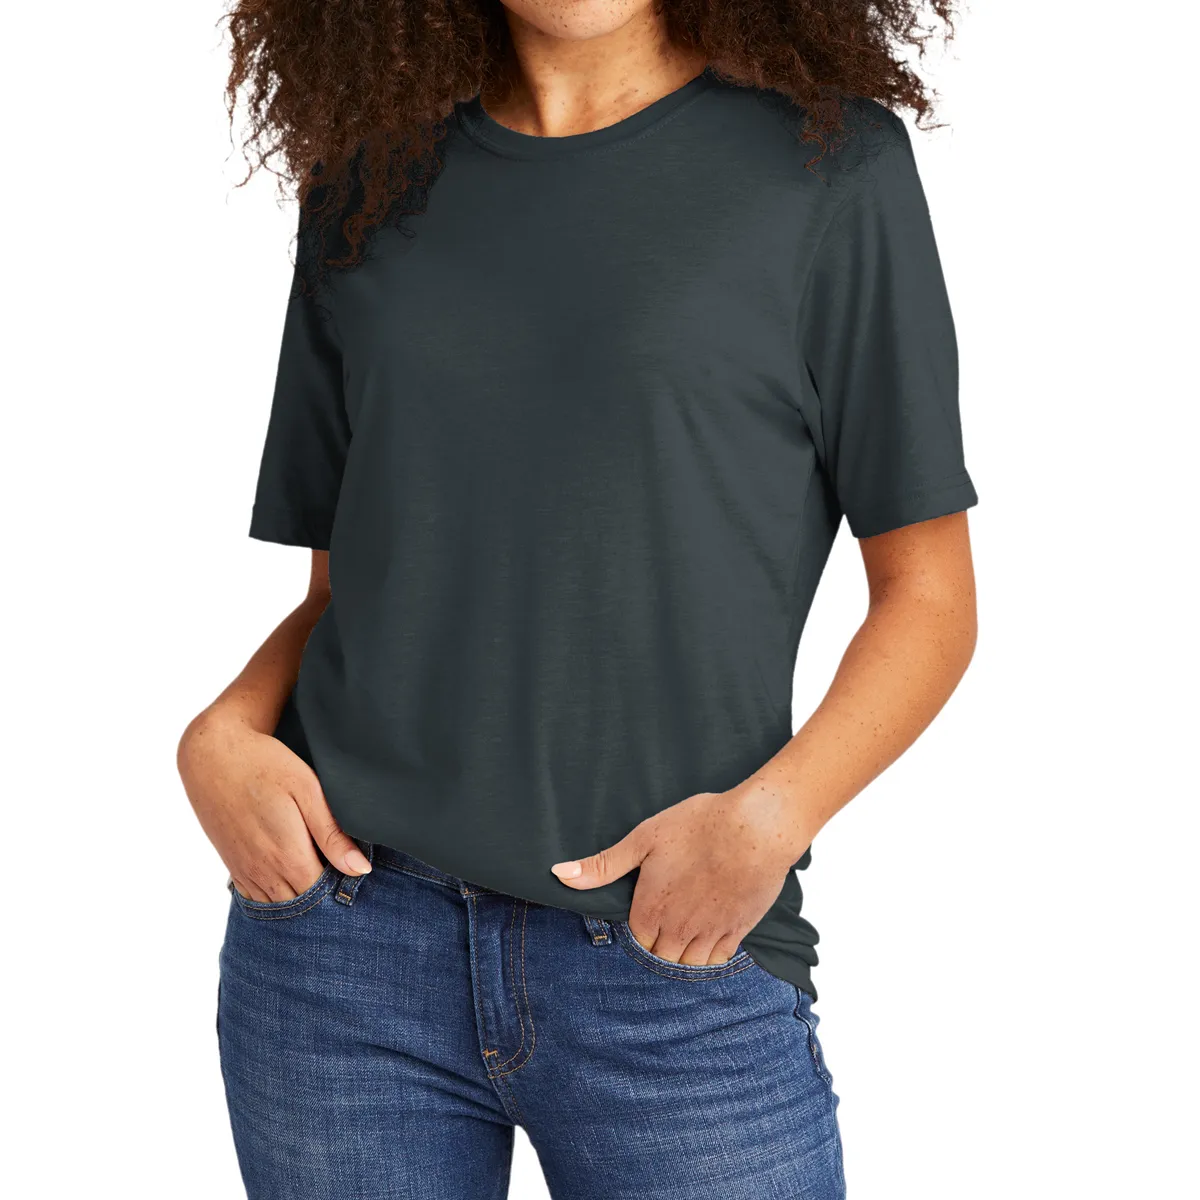 American Apparel Unisex CVC T Shirt T-shirts personnalisés Next Level Apparel INTO THE Mens T Shirt Soft Fitted Fresh Classic T shirts